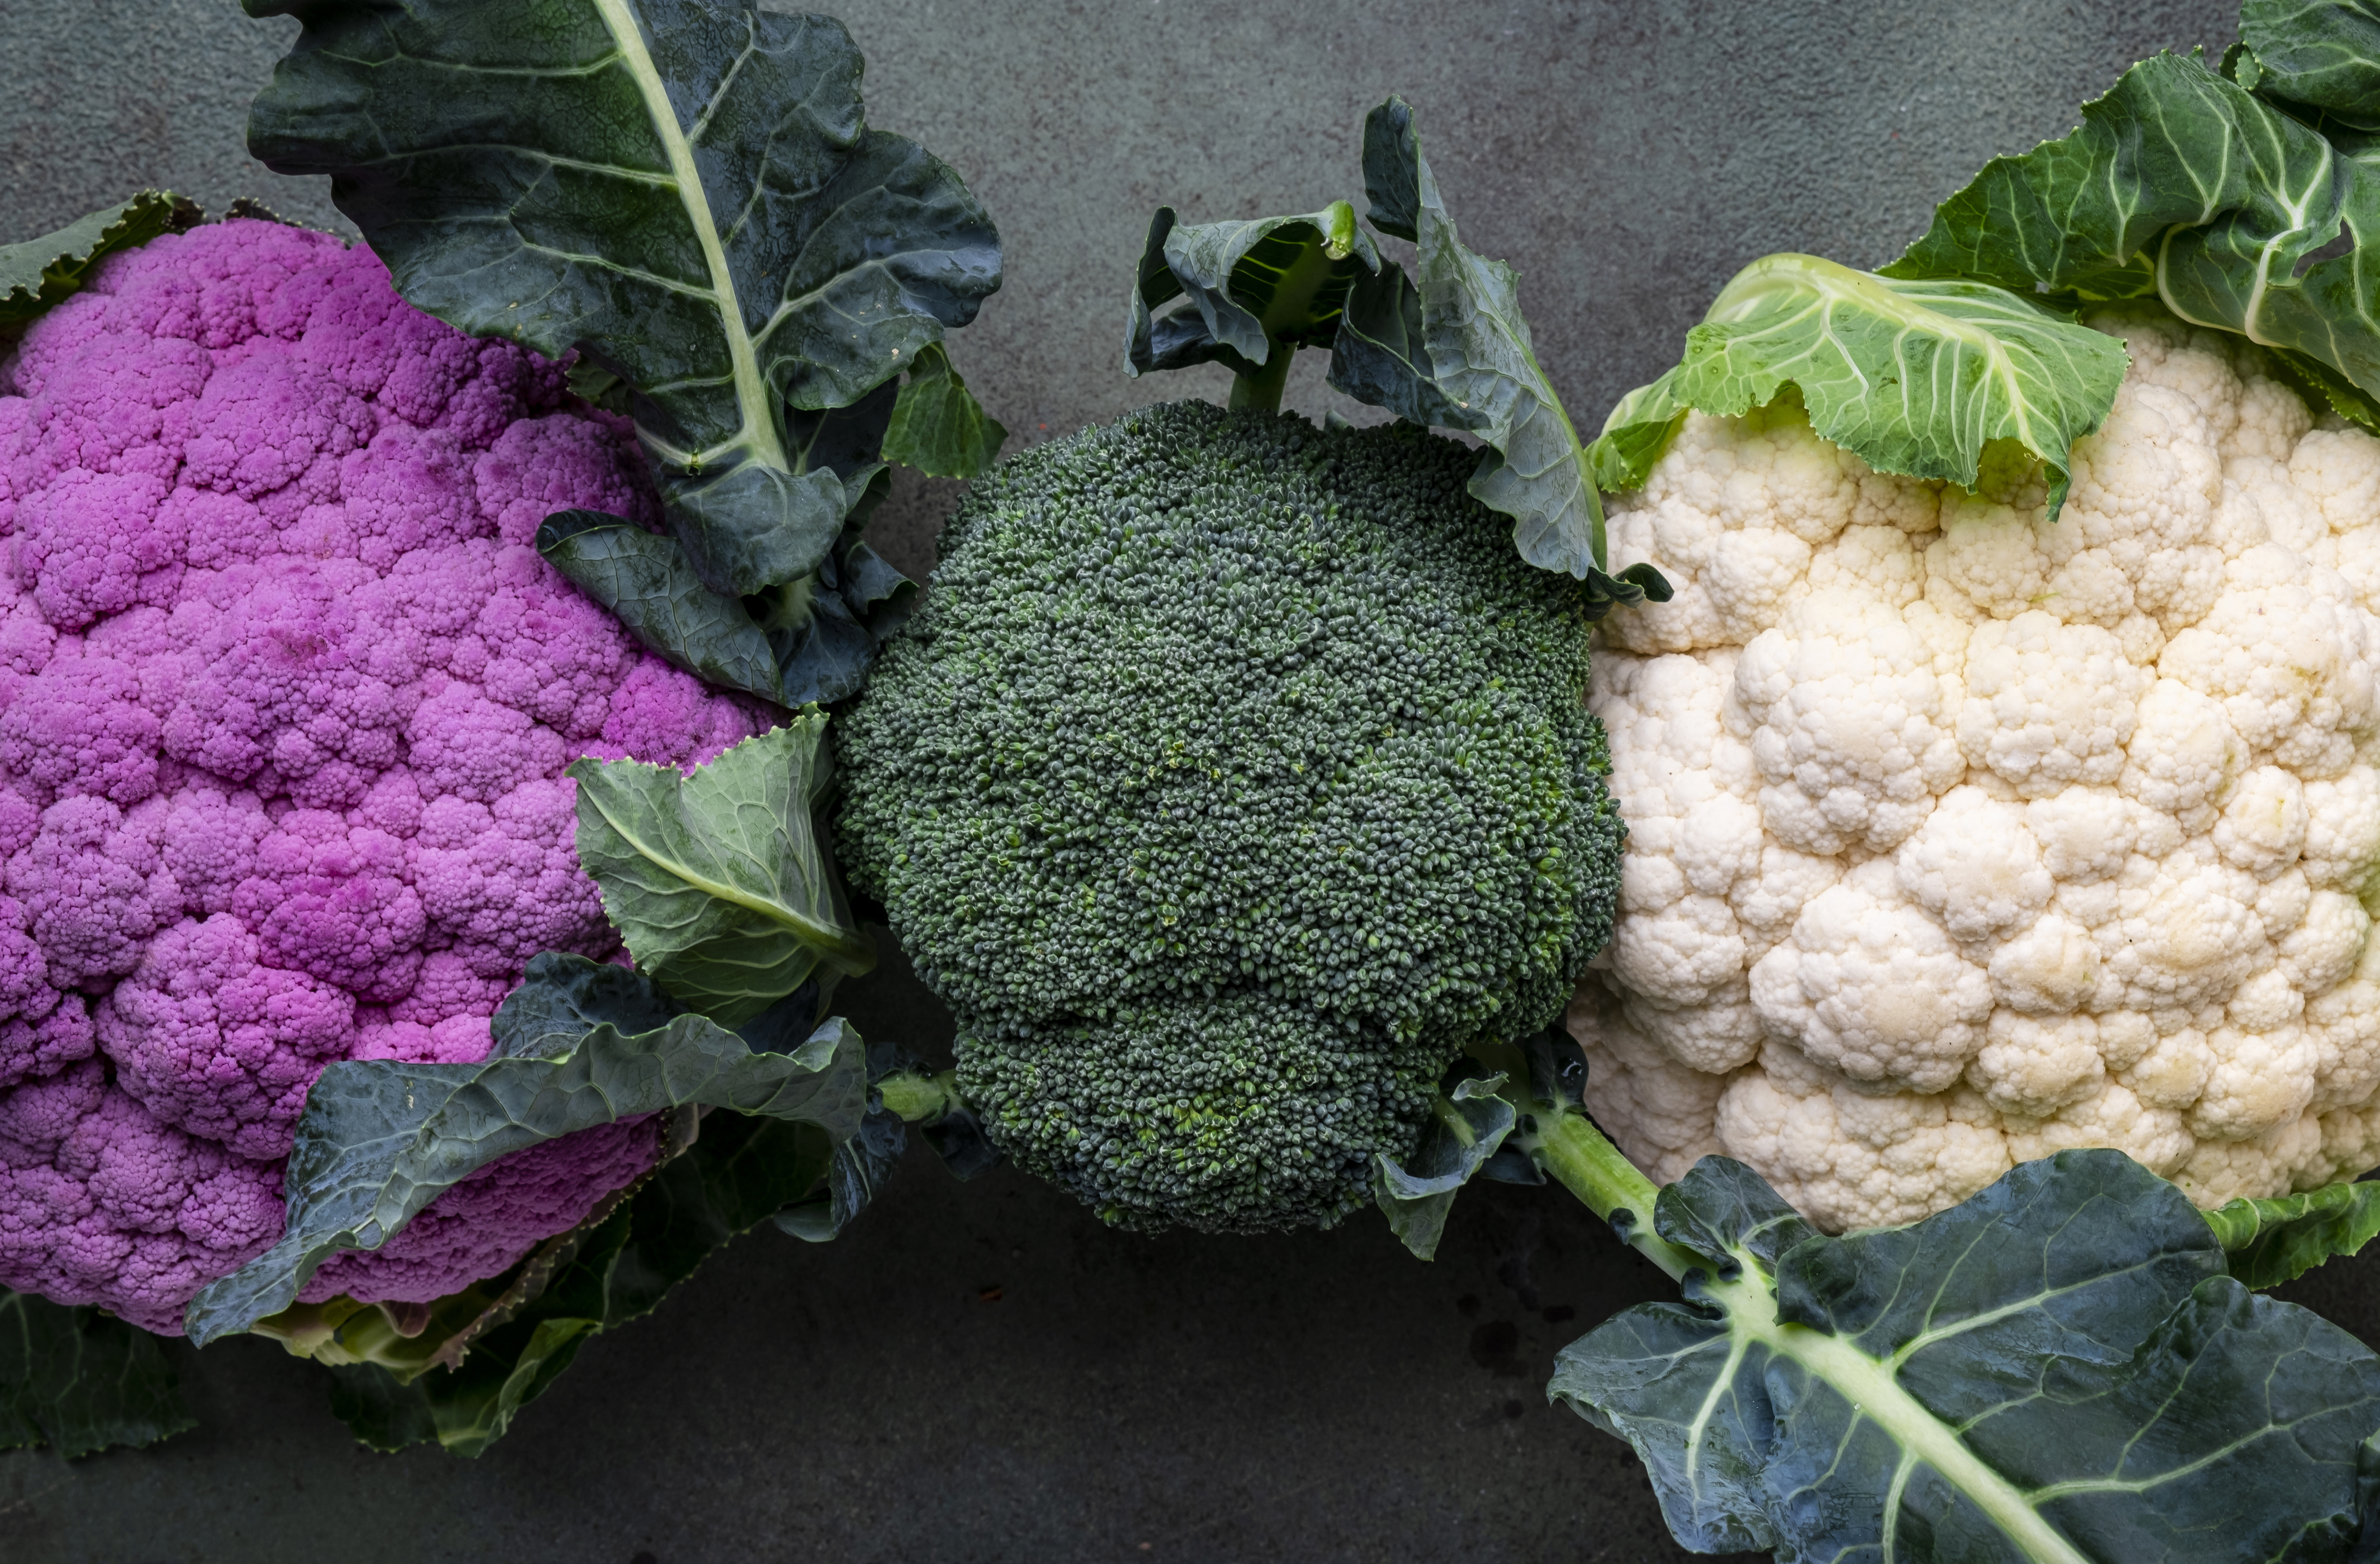 Three varieties of fresh broccoli and cauliflower displayed side by side